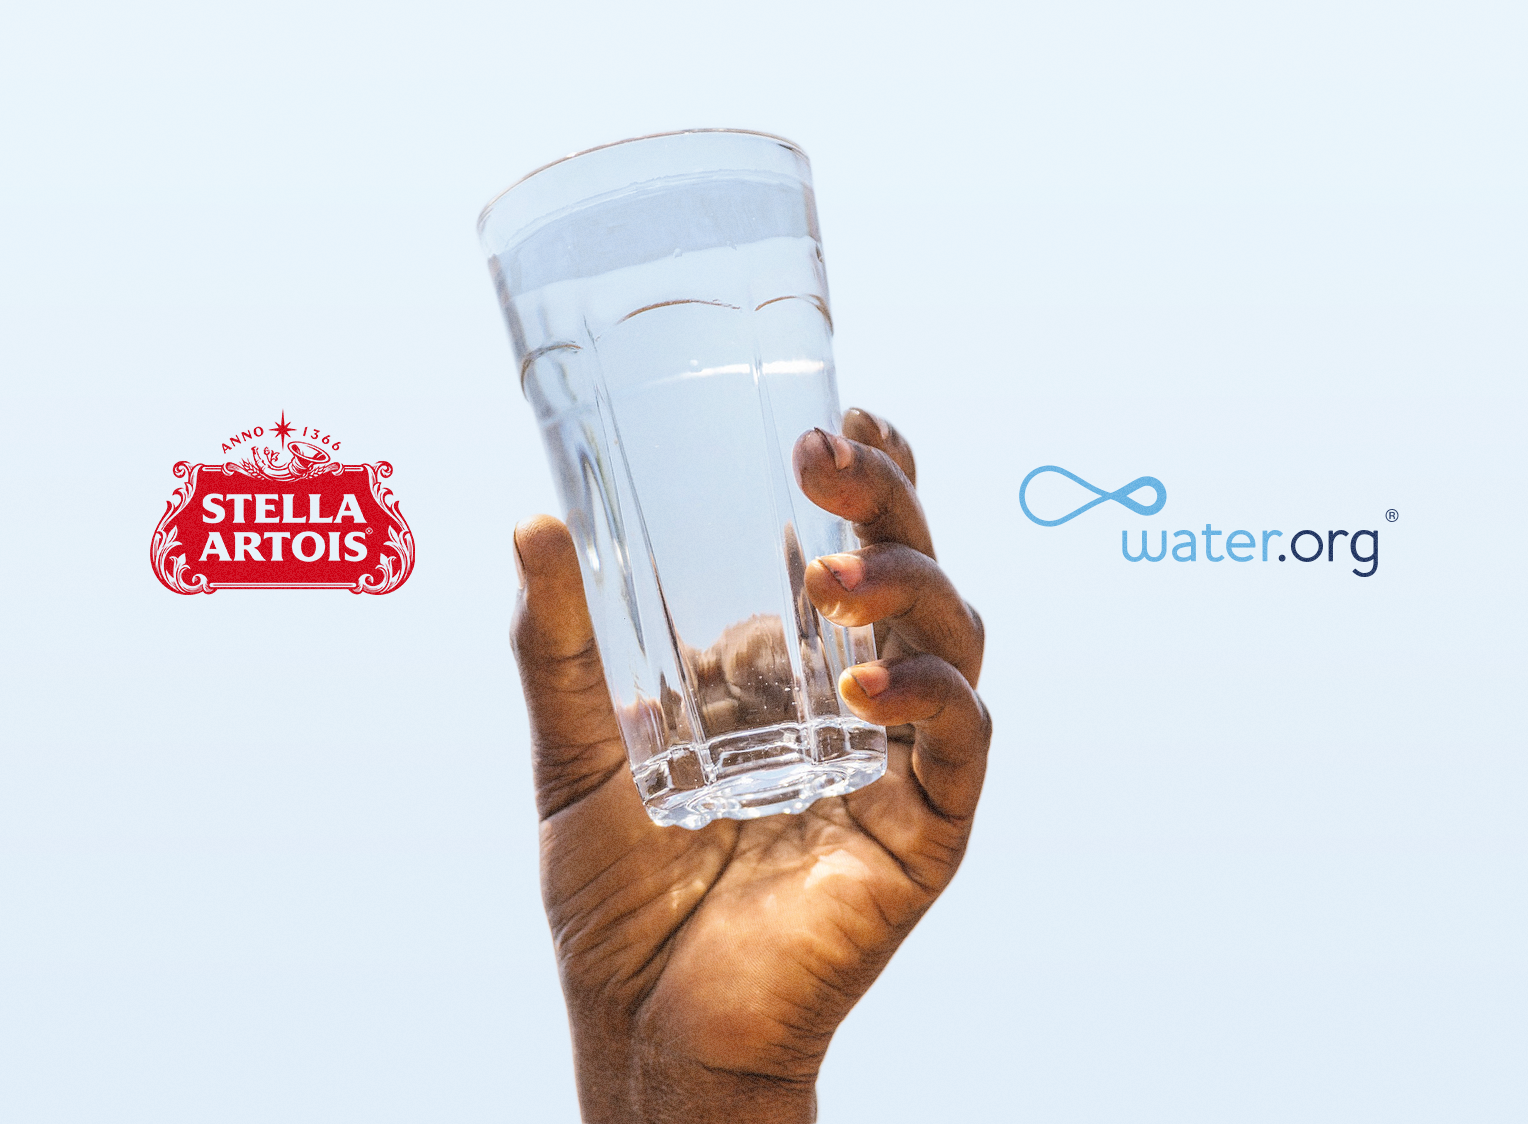 Water.org and Stella Artois Partnership